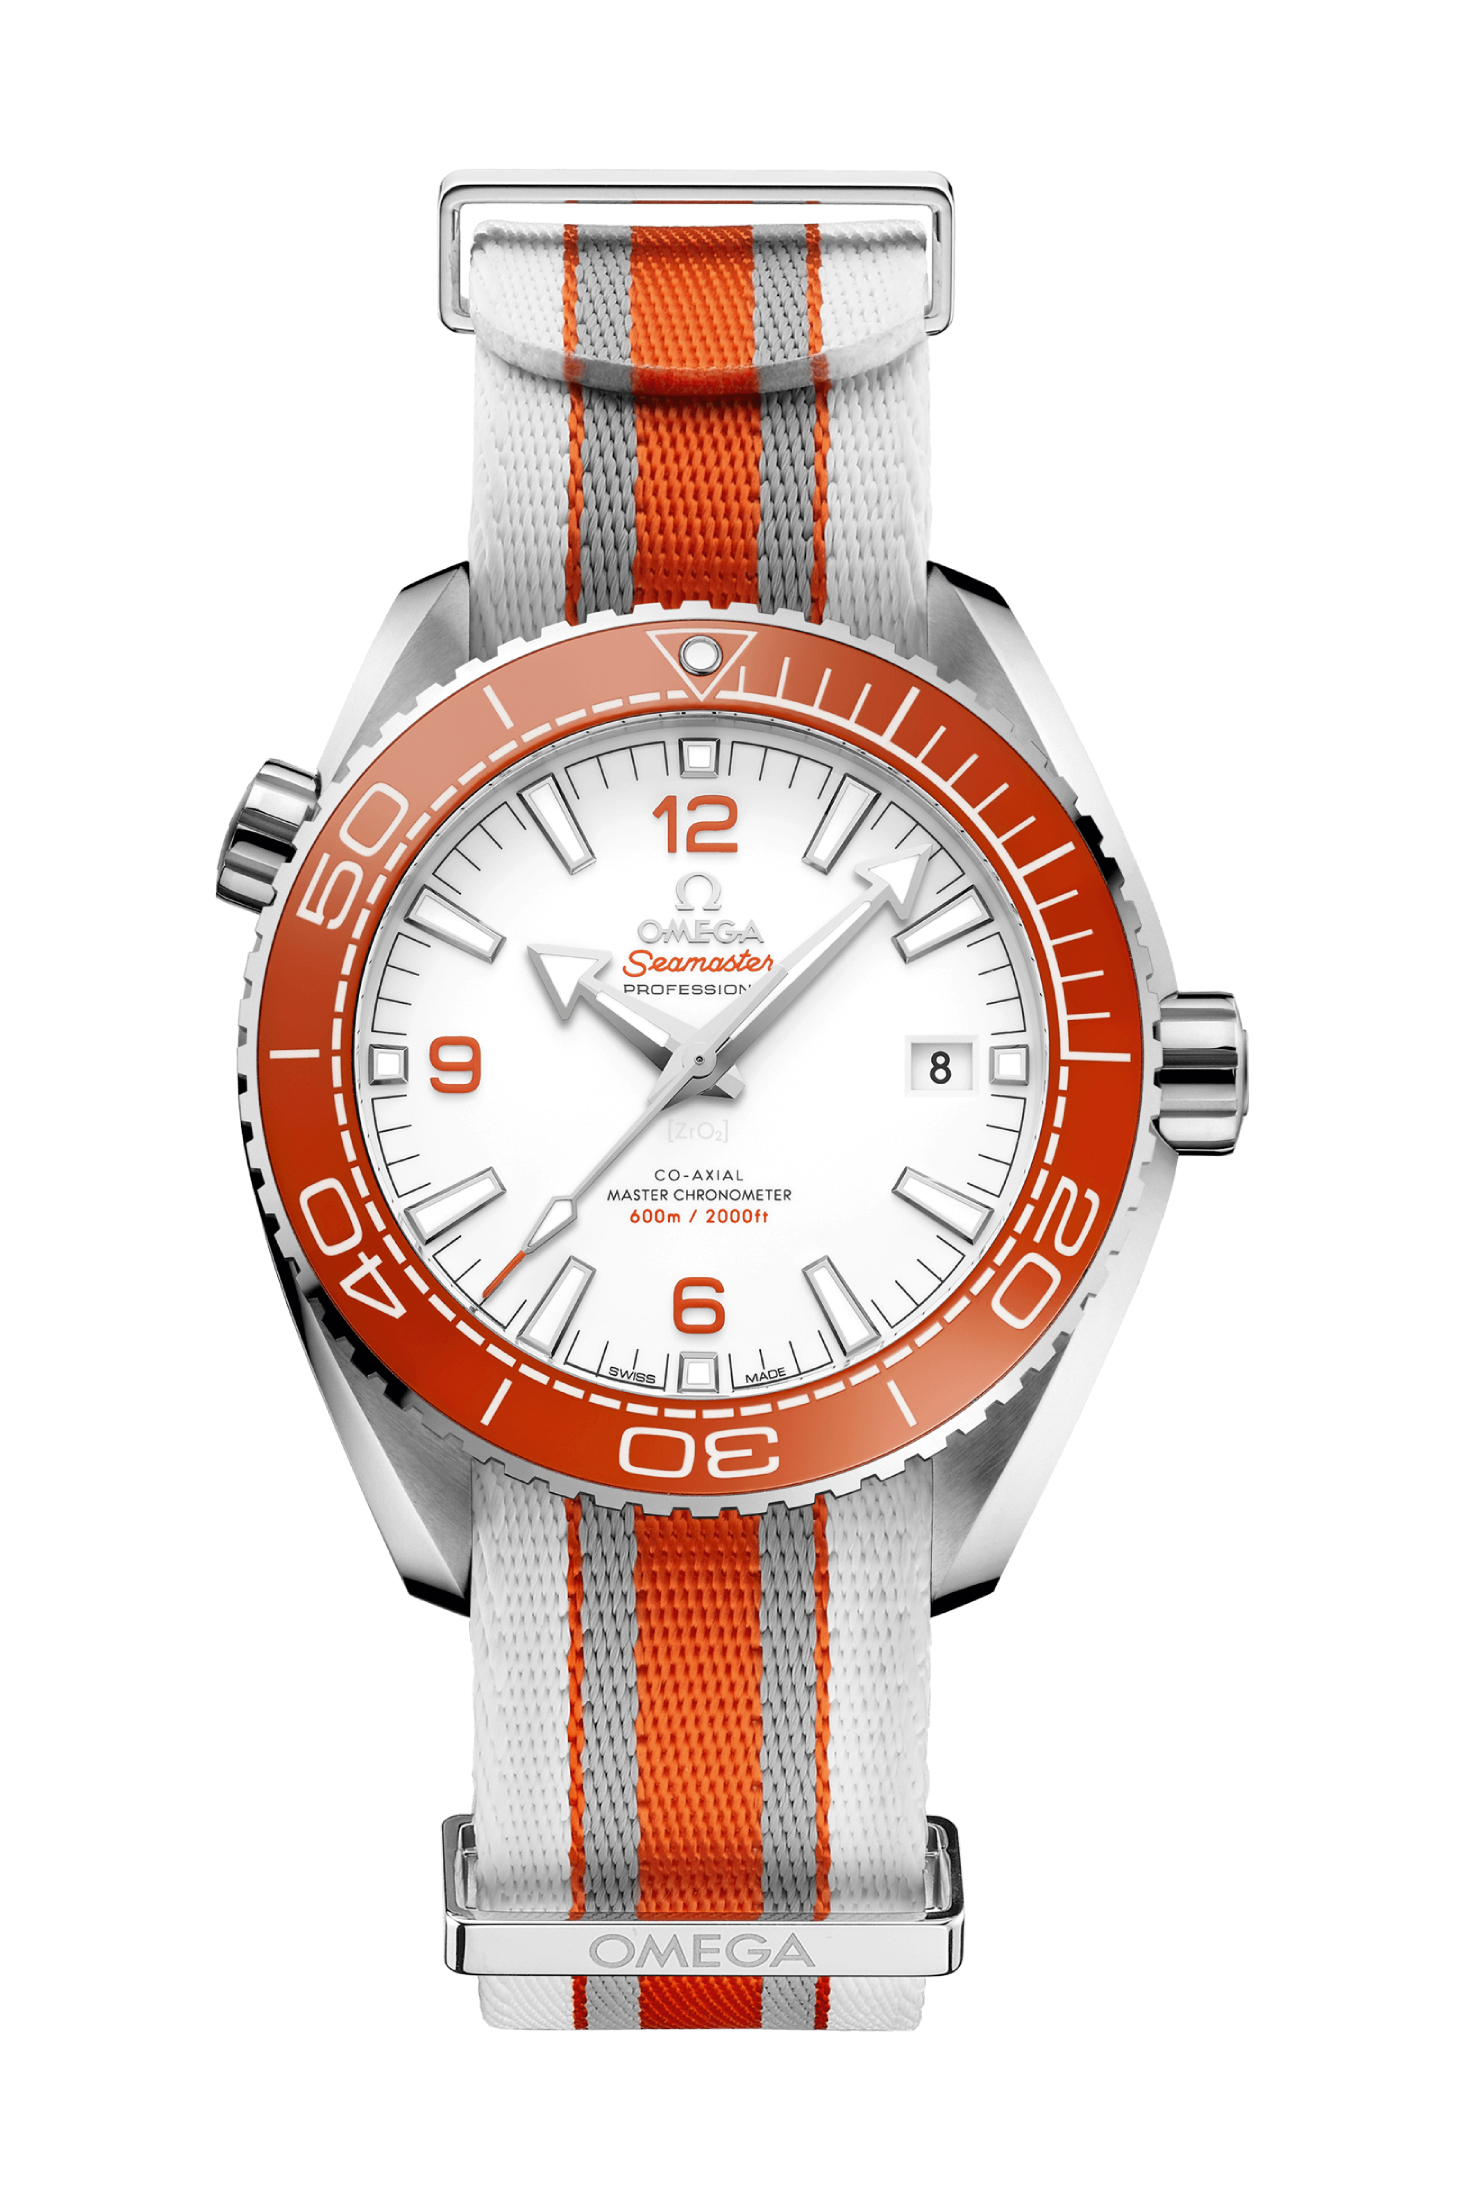 Men's watch / unisex  OMEGA, Planet Ocean 600m Co Axial Master Chronometer / 43.5mm, SKU: 215.32.44.21.04.001 | watchphilosophy.co.uk